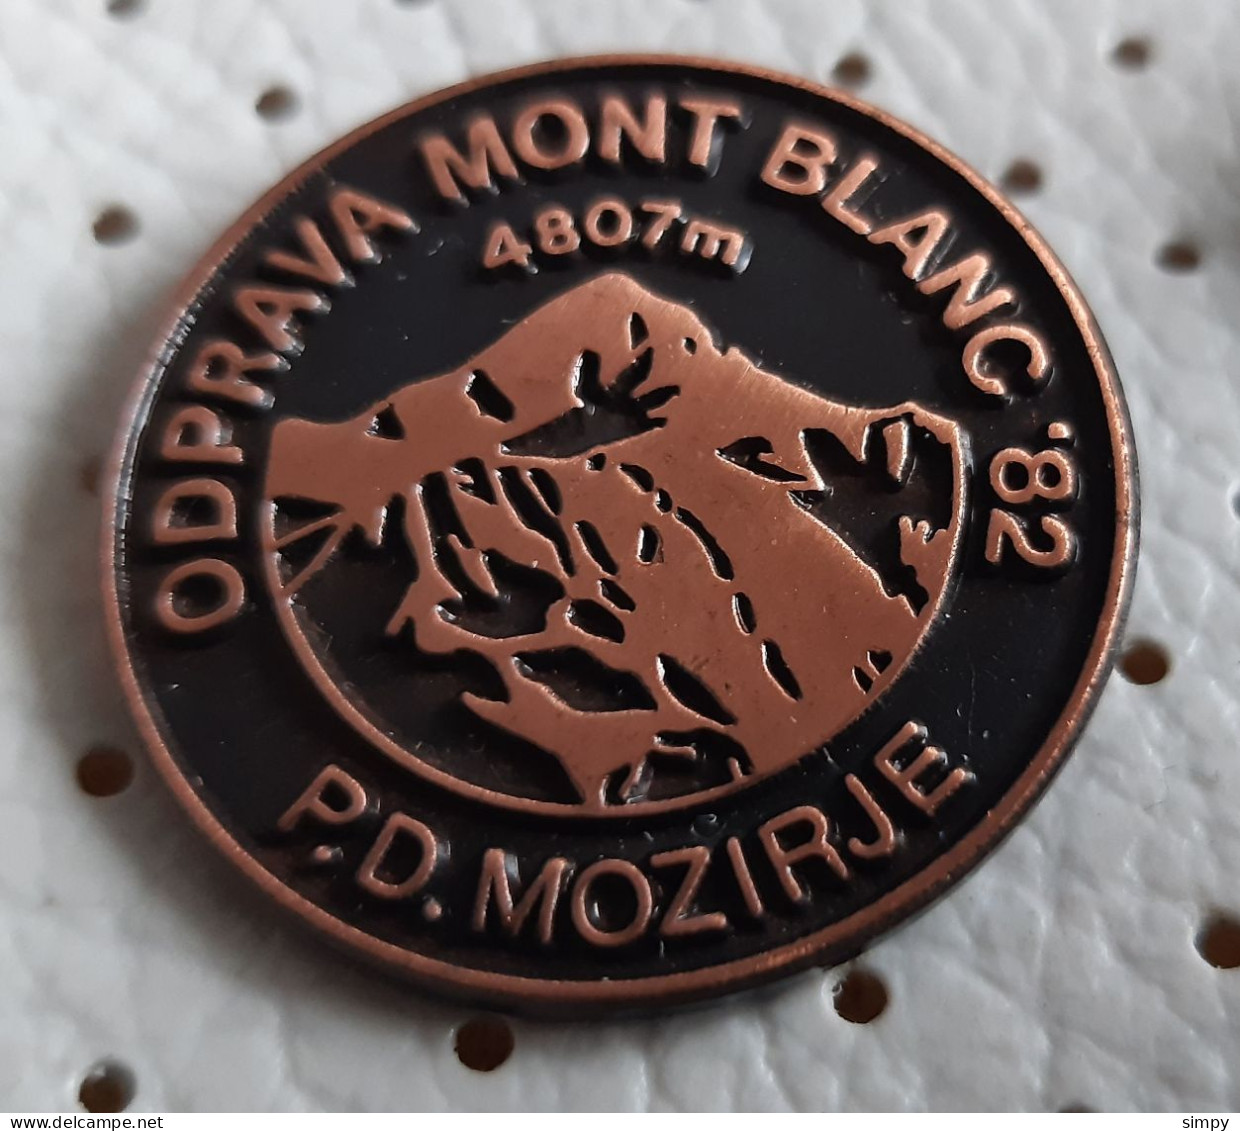 Yugoslav Expedition MONT BLANC 4807m  1982 PD Mozirje Slovenia Alpinism Mountaineering Pin - Alpinisme, Beklimming